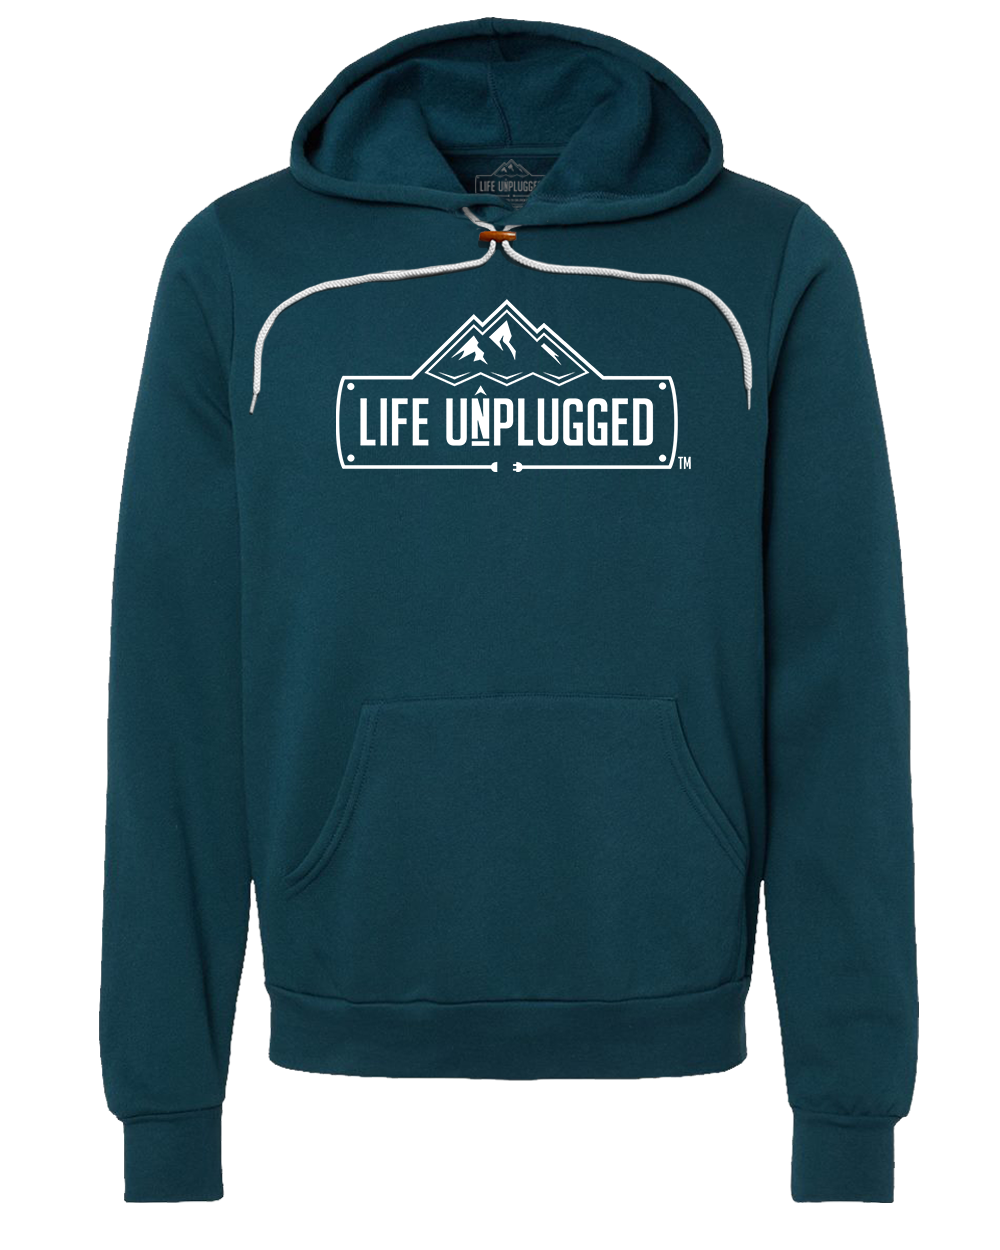 Life Unplugged Logo Premium Super Soft Hooded Sweatshirt - Life Unplugged